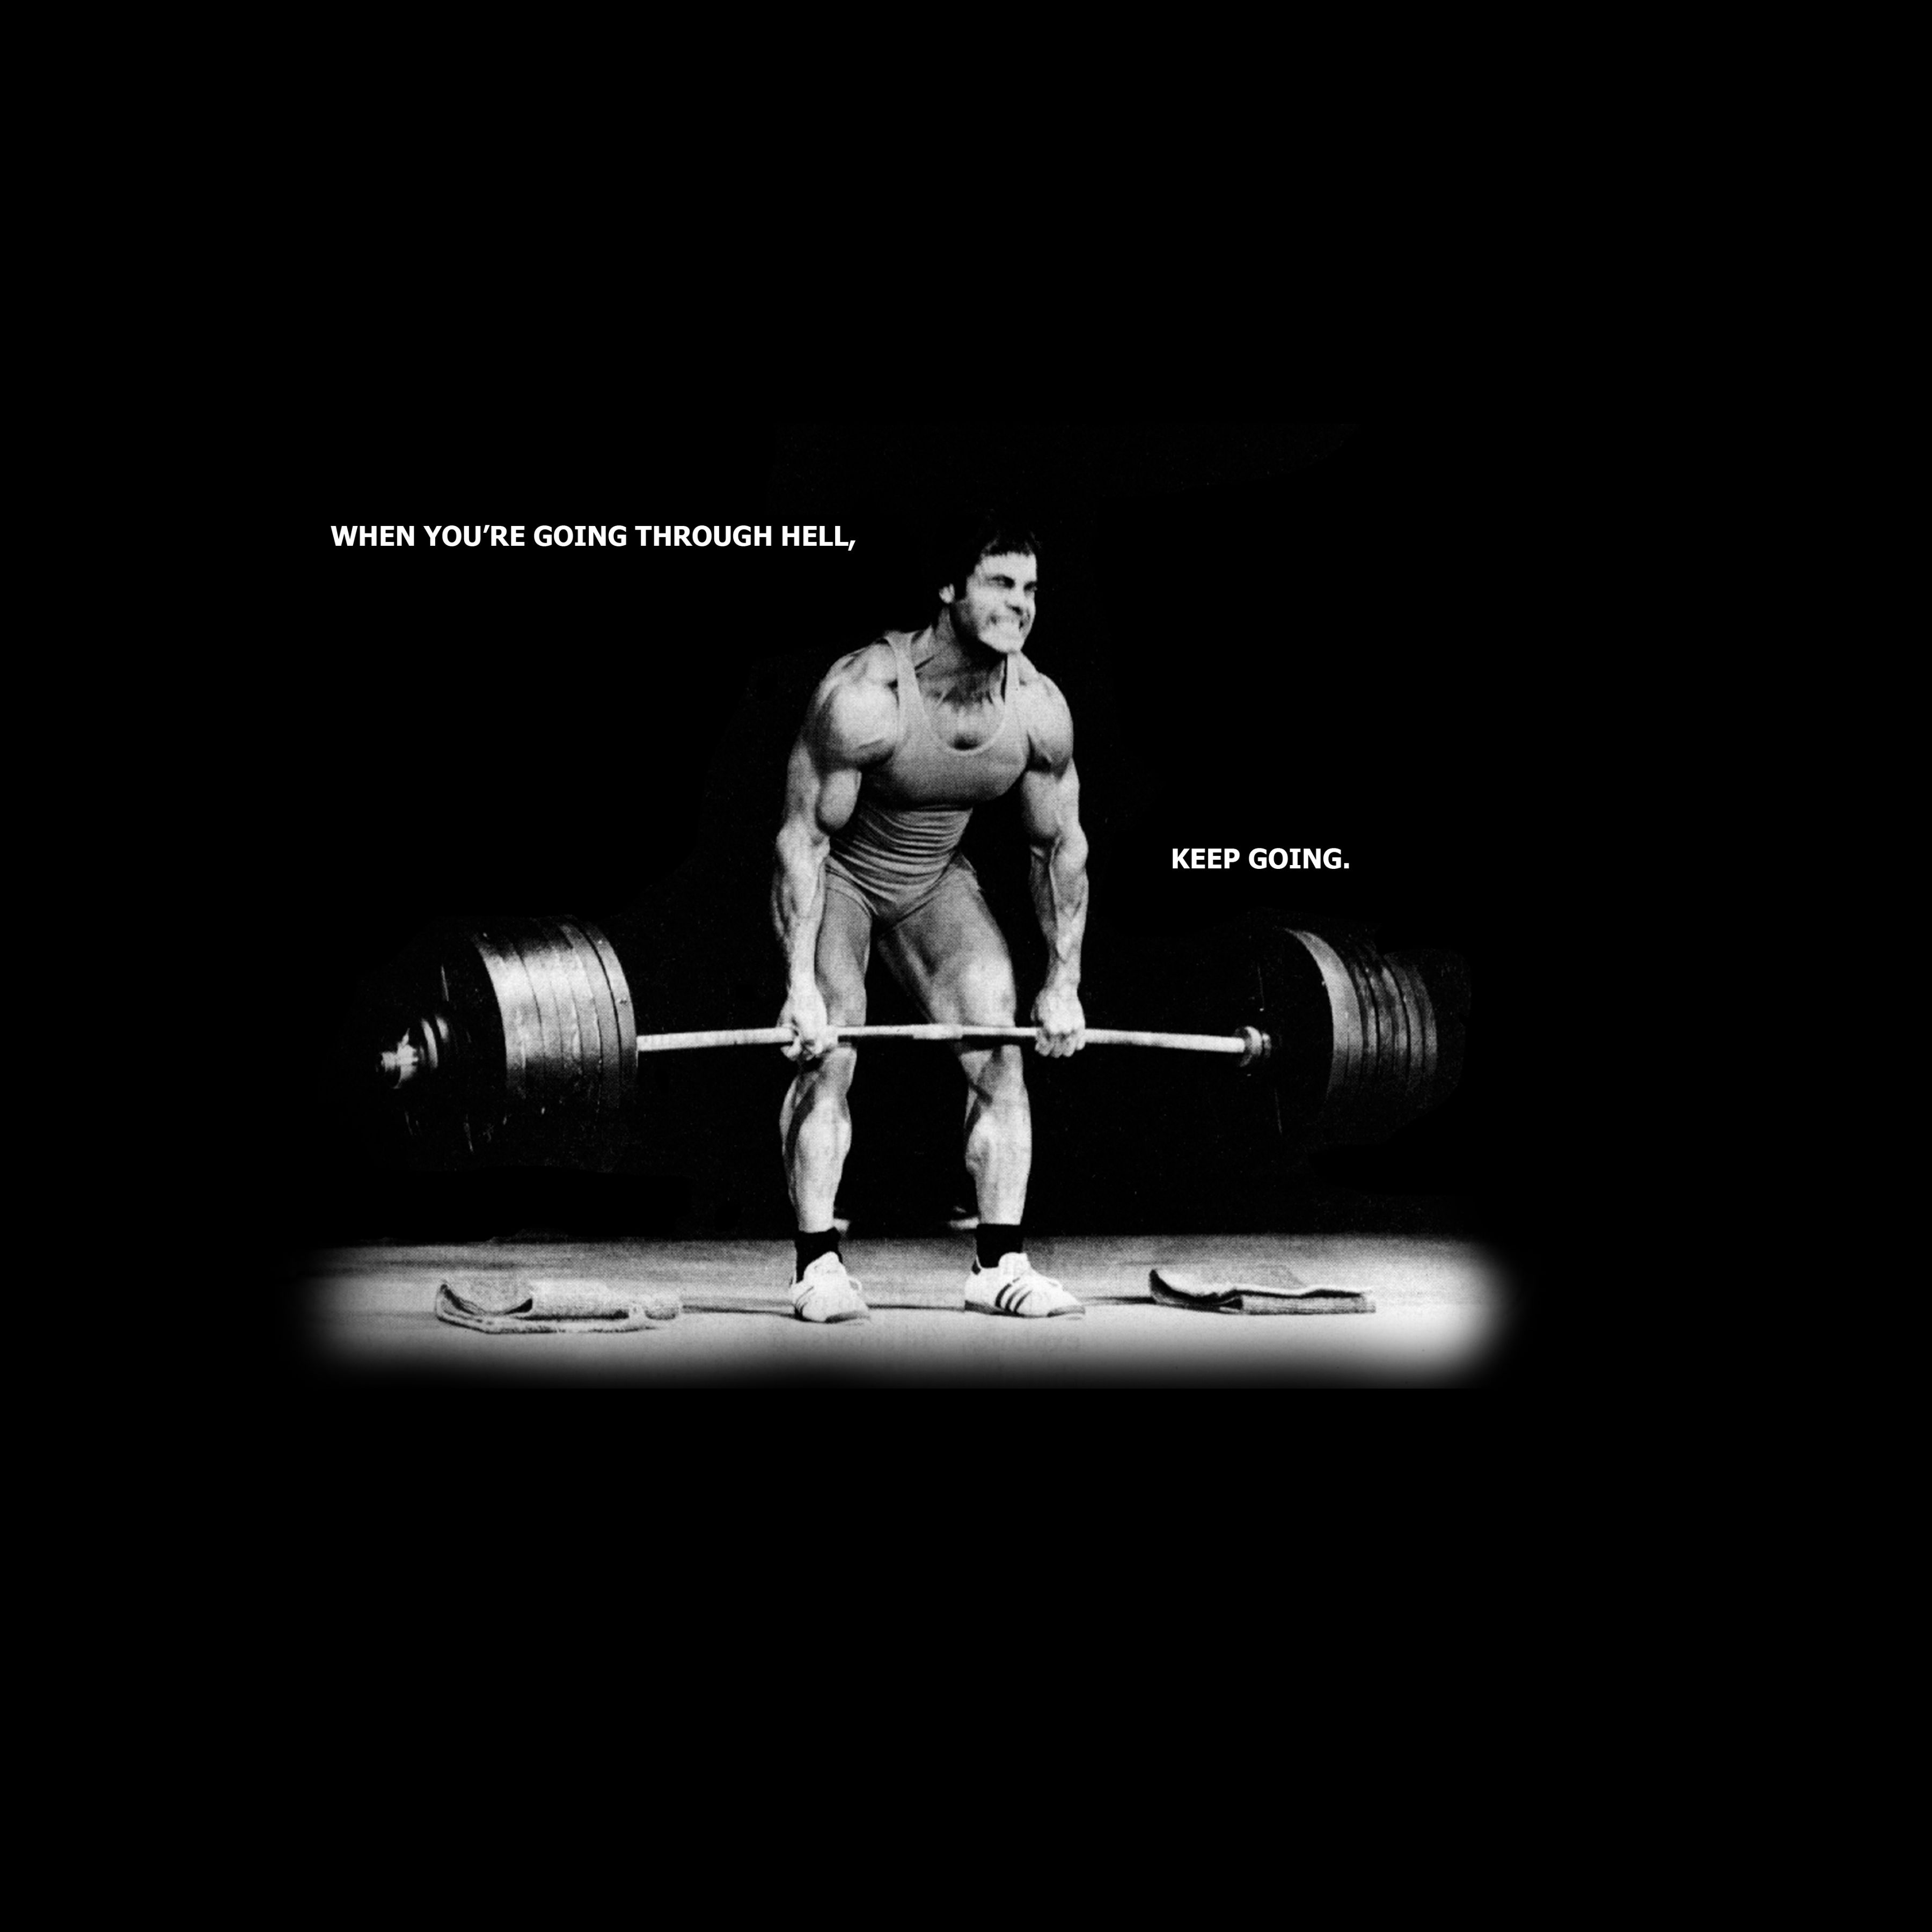 50+] Arnold Motivational Wallpapers - WallpaperSafari